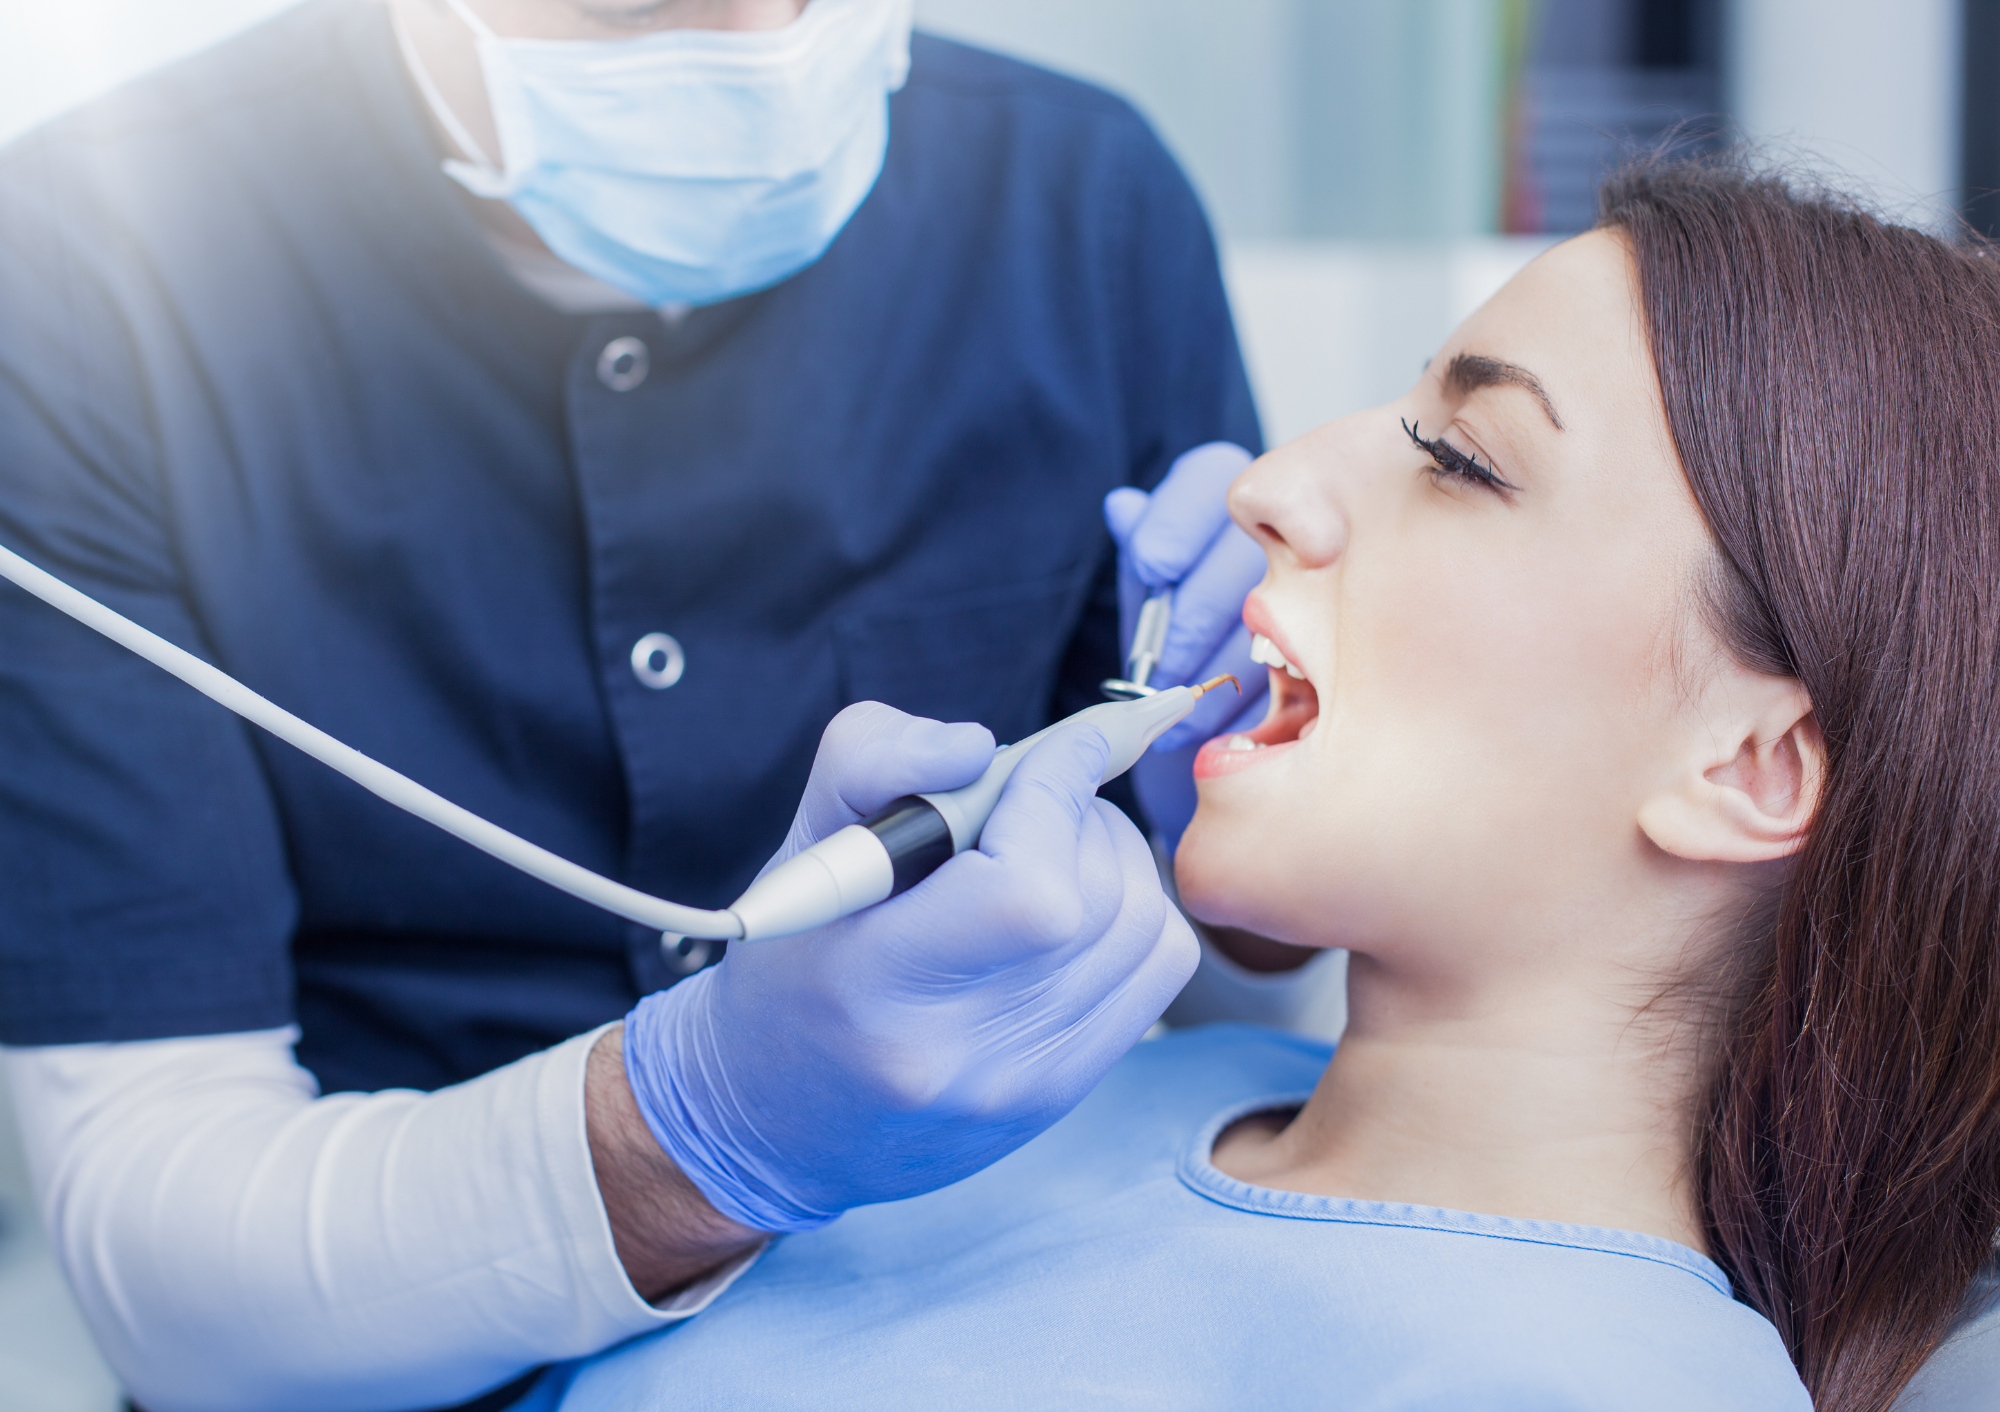 Quanto dura una pulizia dentale di qualità?